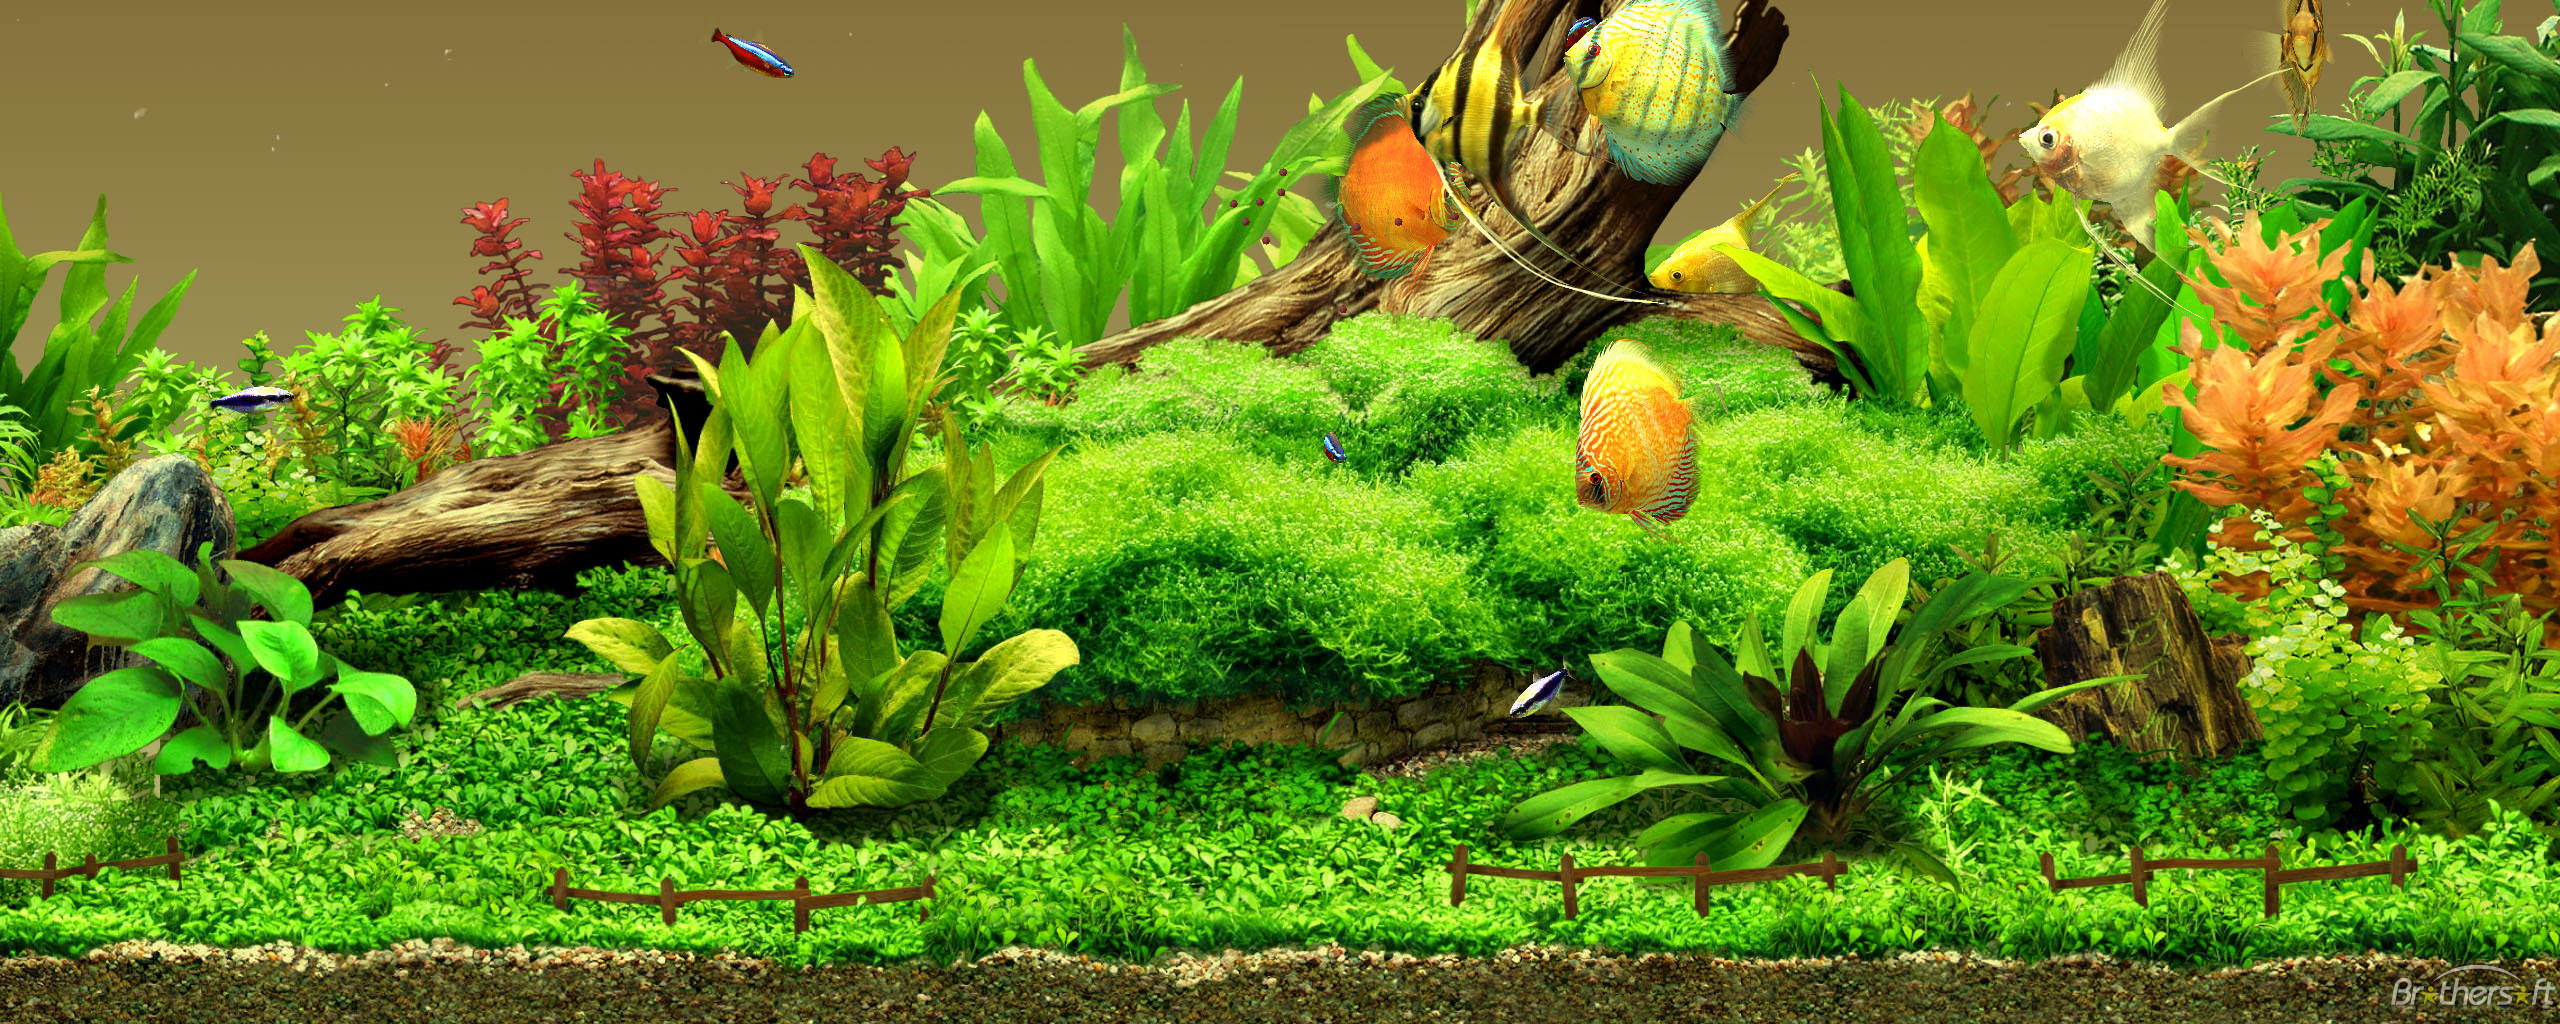 🔥 Download Aquarium Background Wallpaper Image Pictures by krivera63